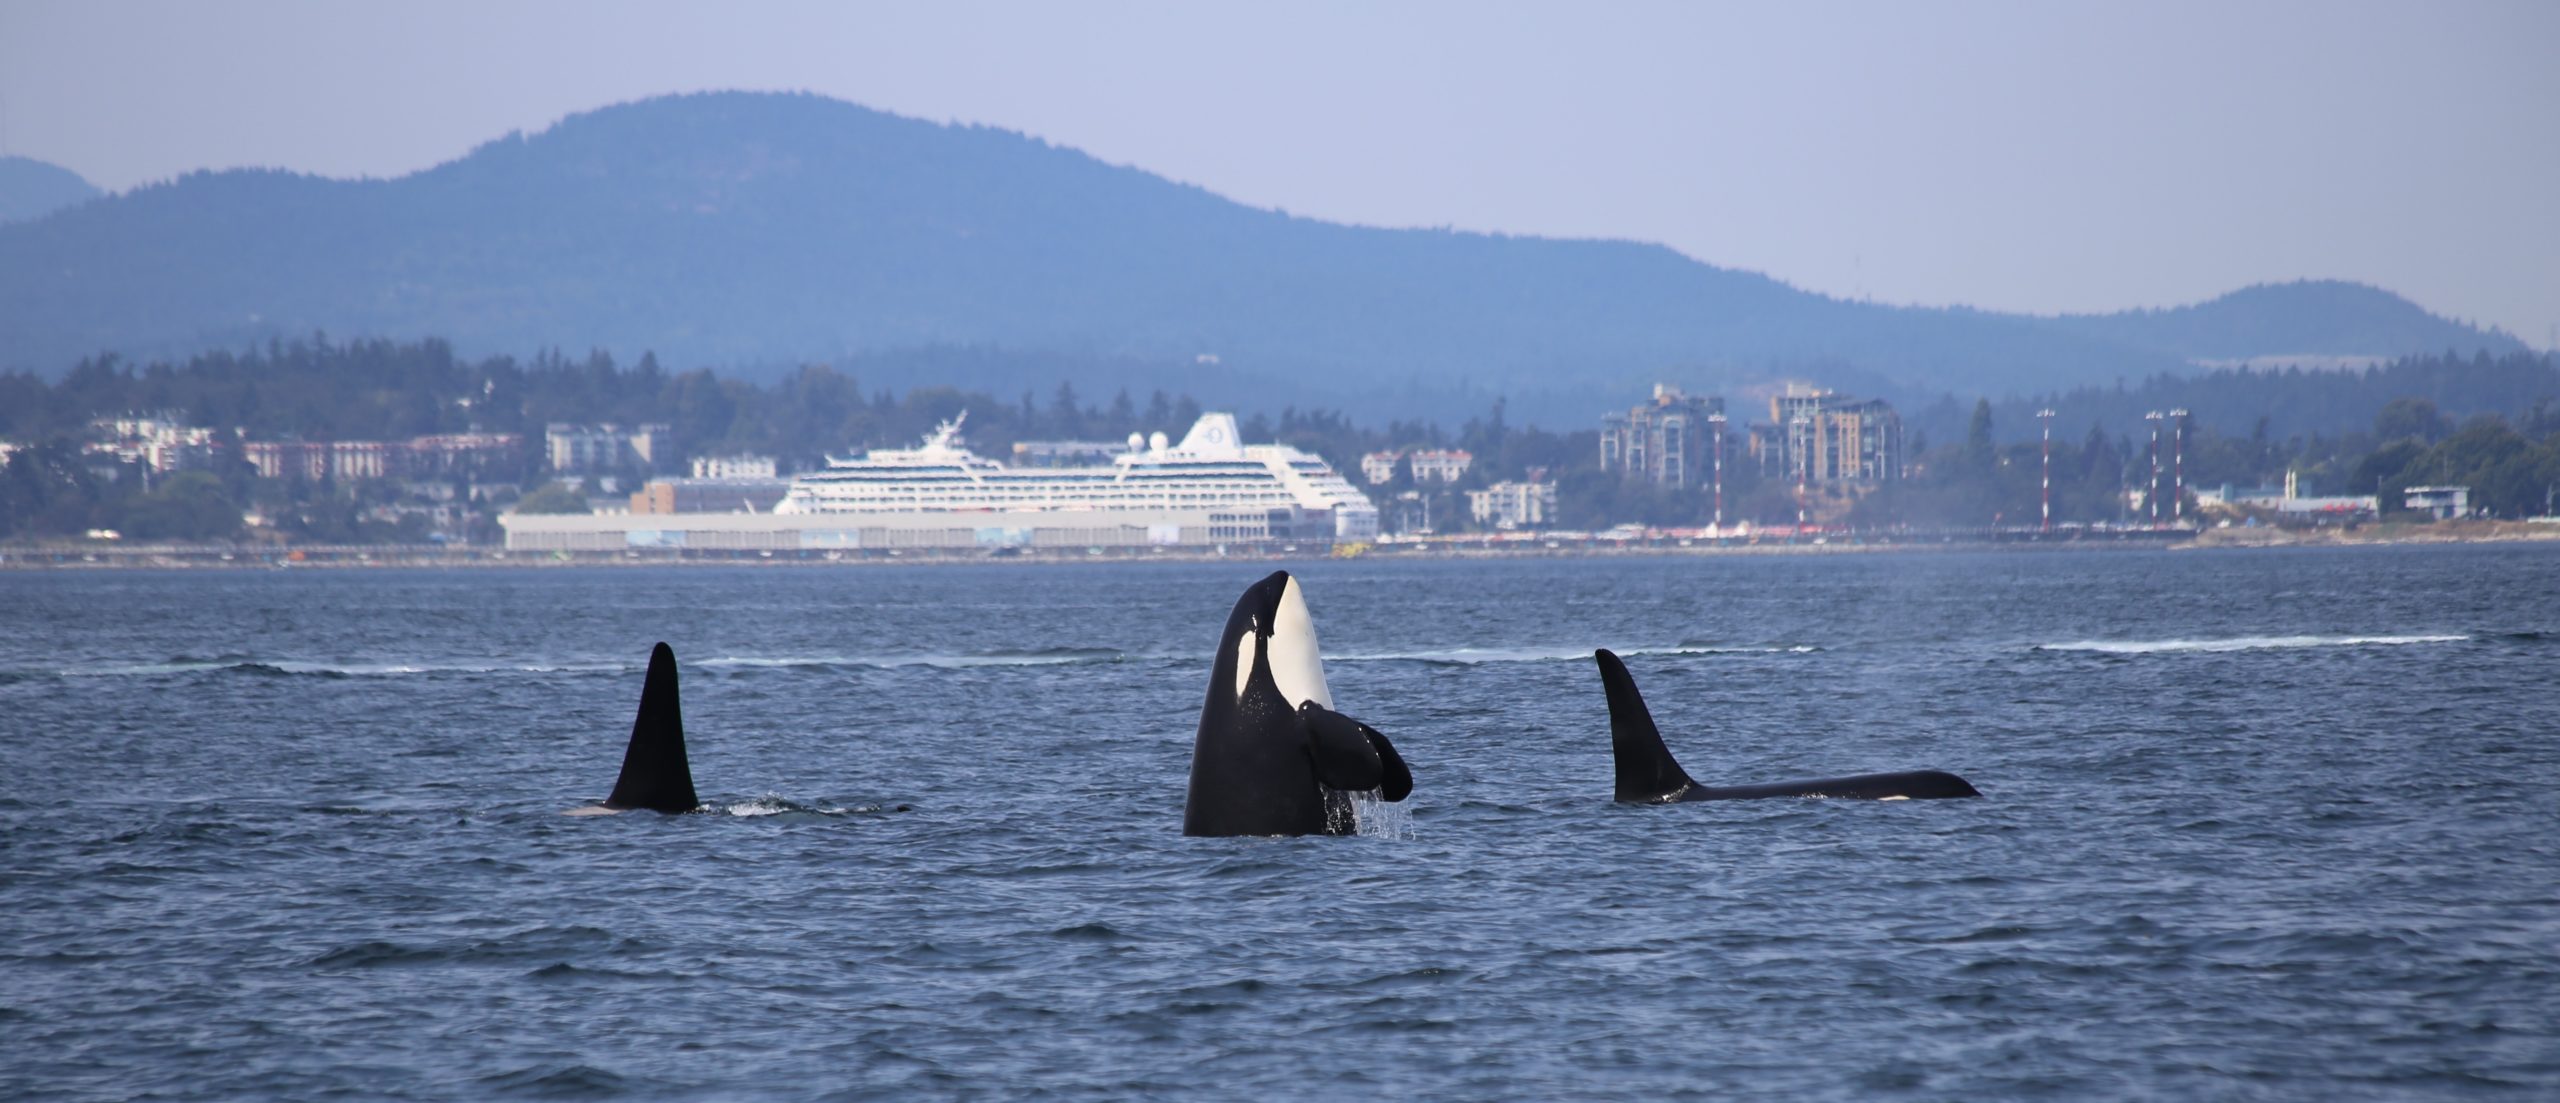 Orcas near ship